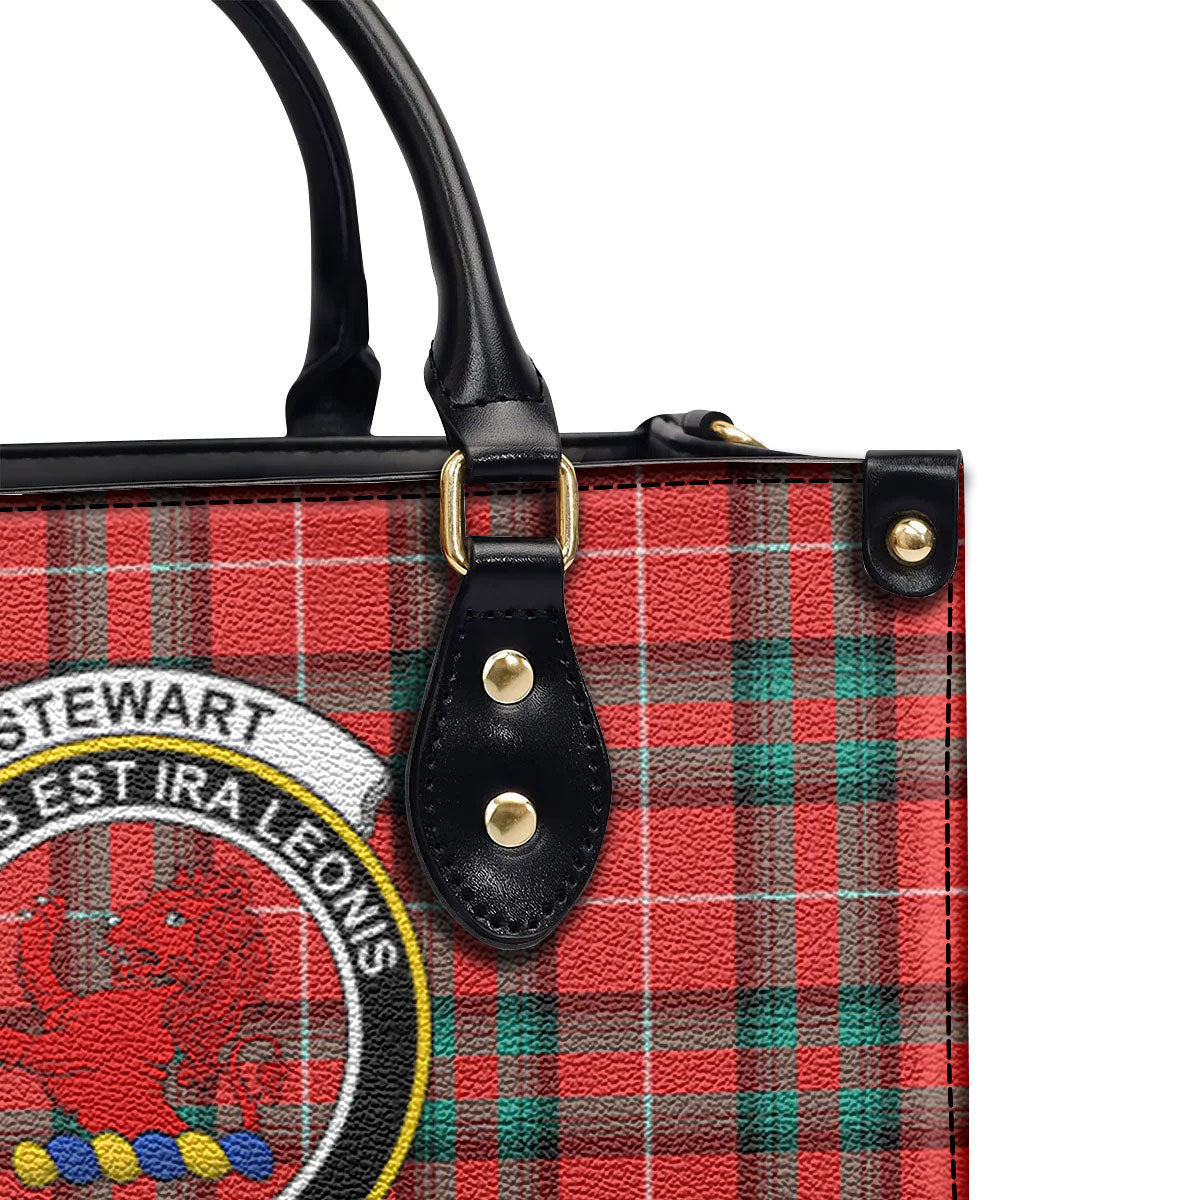 Stewart (Stuart) of Bute Tartan Crest Leather Handbag